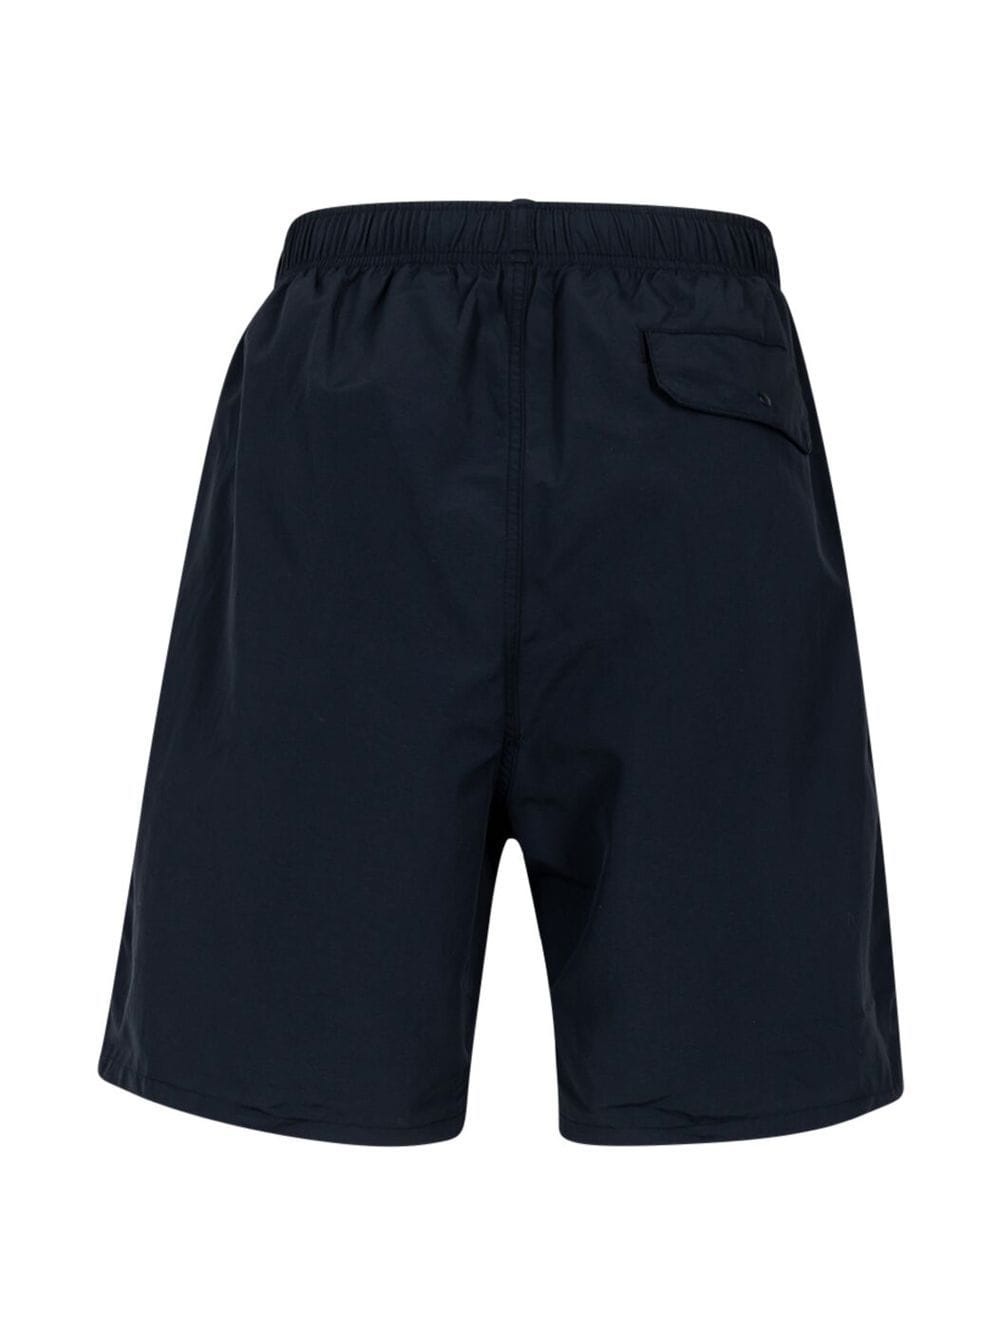 nylon water shorts - 2